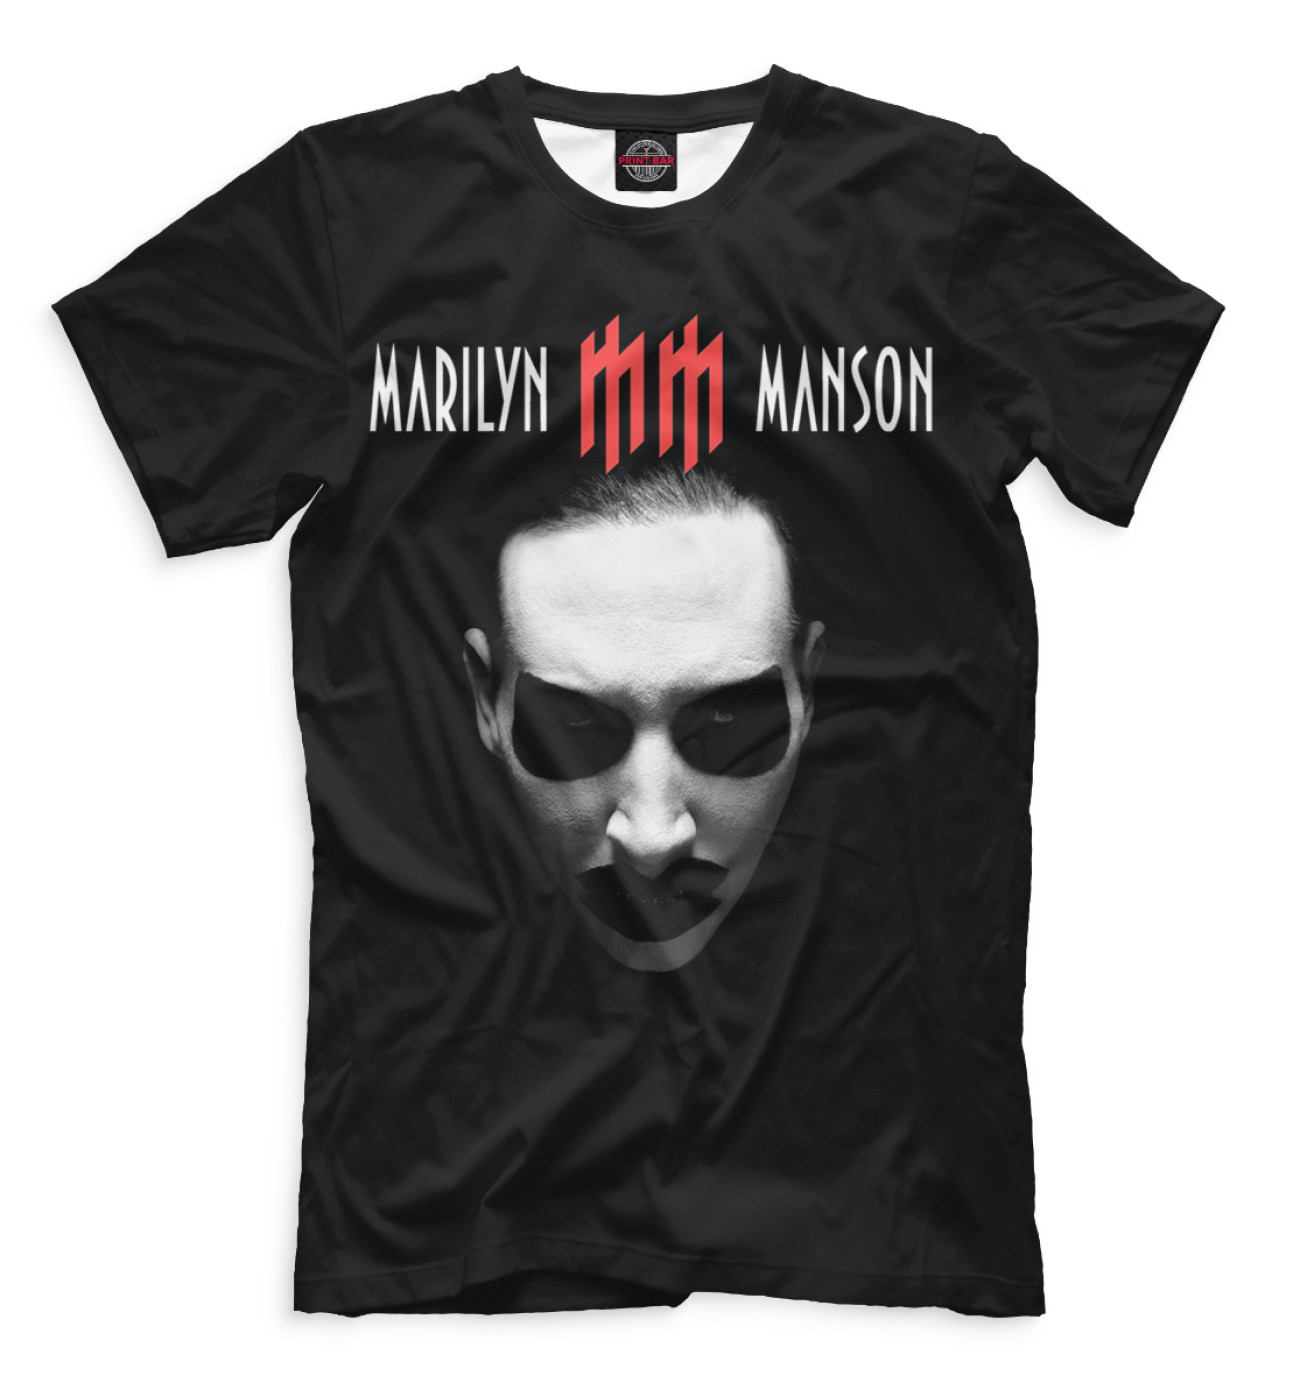 Мужская Футболка Marilyn Manson, артикул: MRM-544700-fut-2